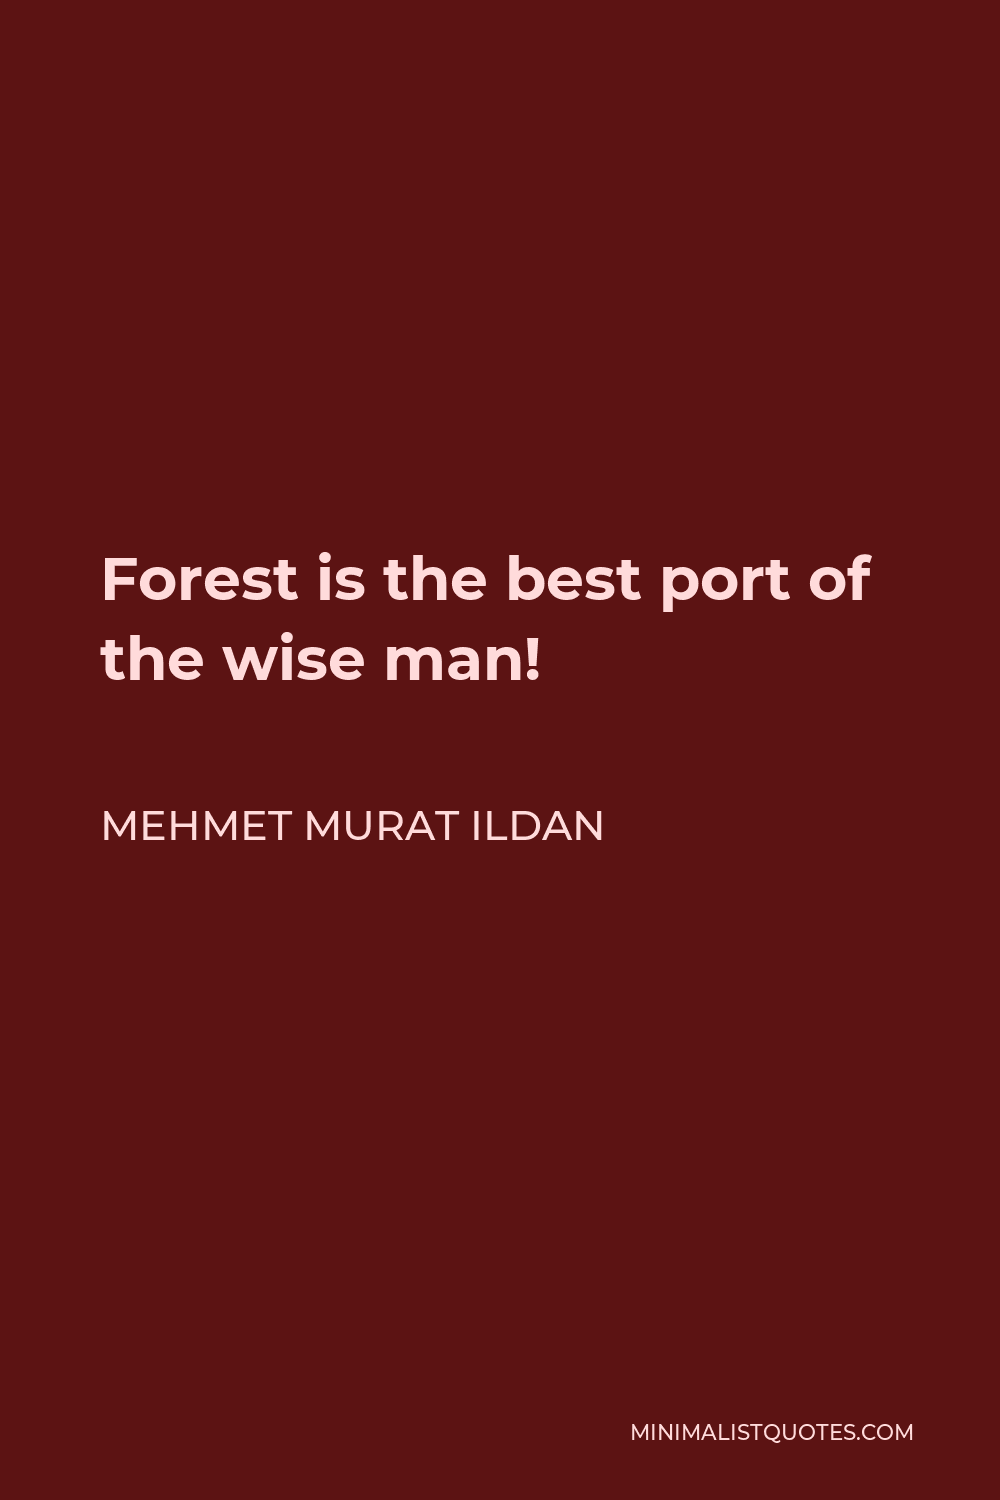 Mehmet Murat Ildan Quote - Forest is the best port of the wise man!